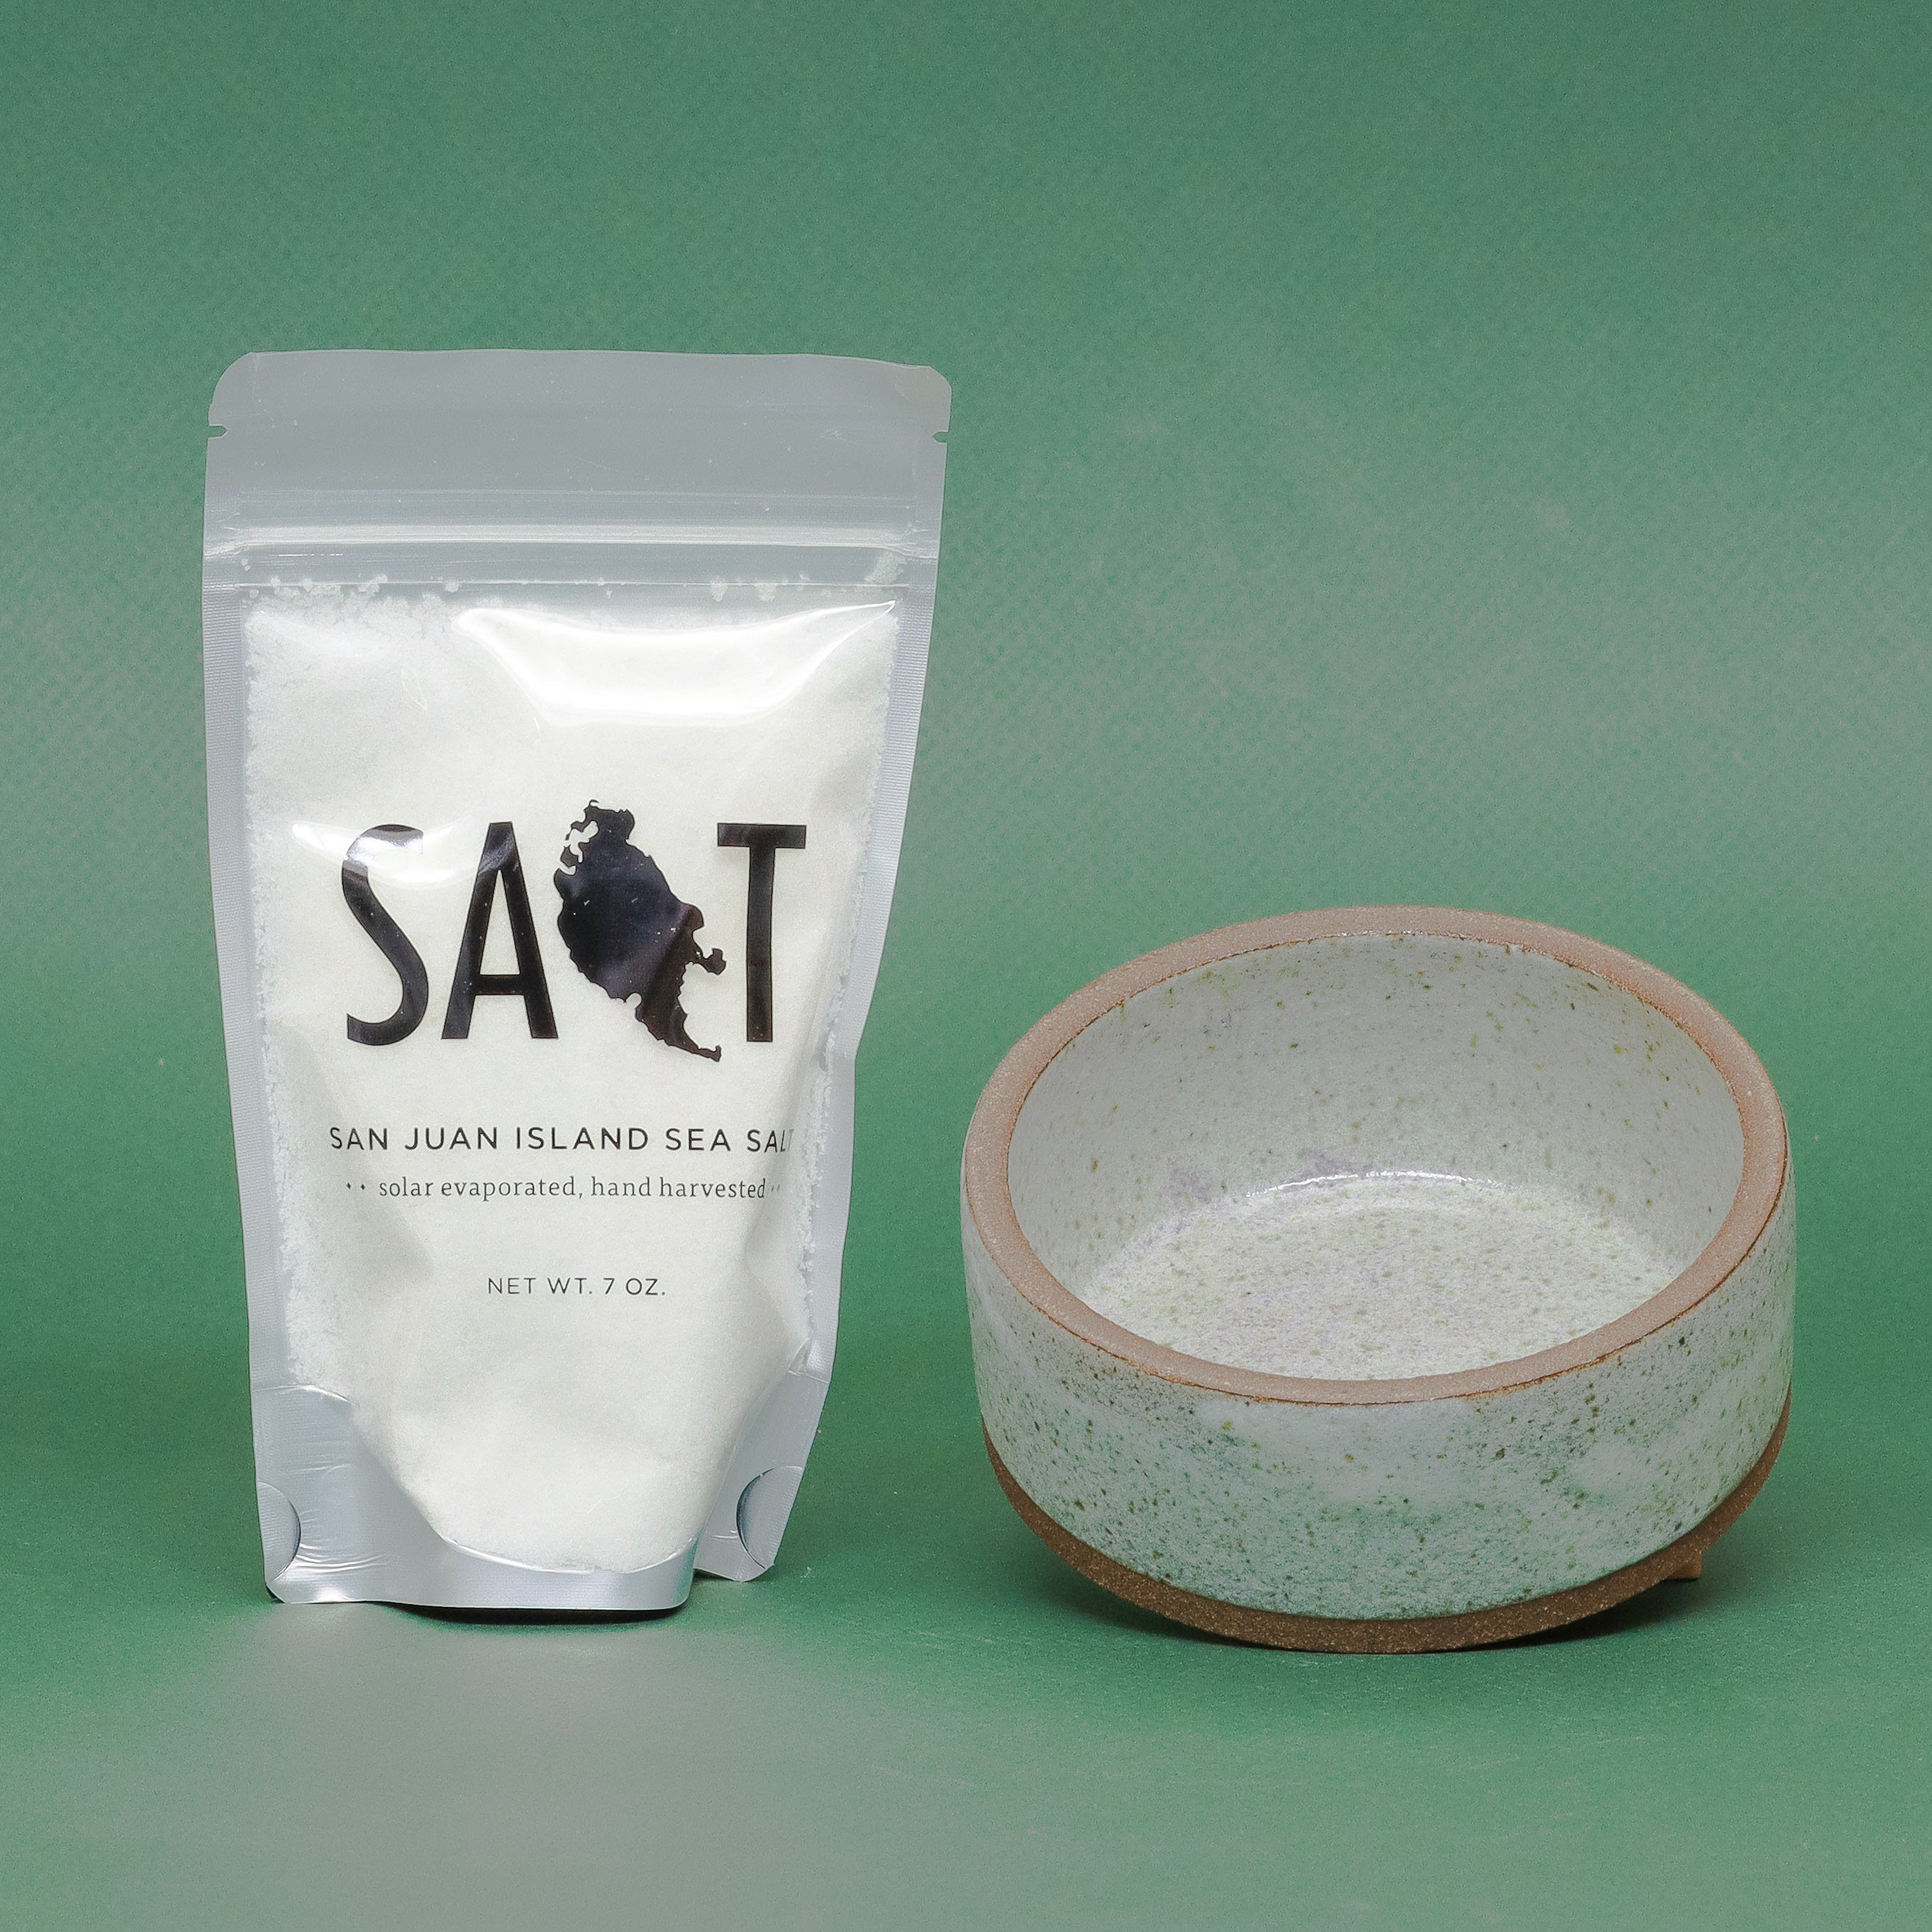 The Saltstone Ceramics Salty Gift Pack